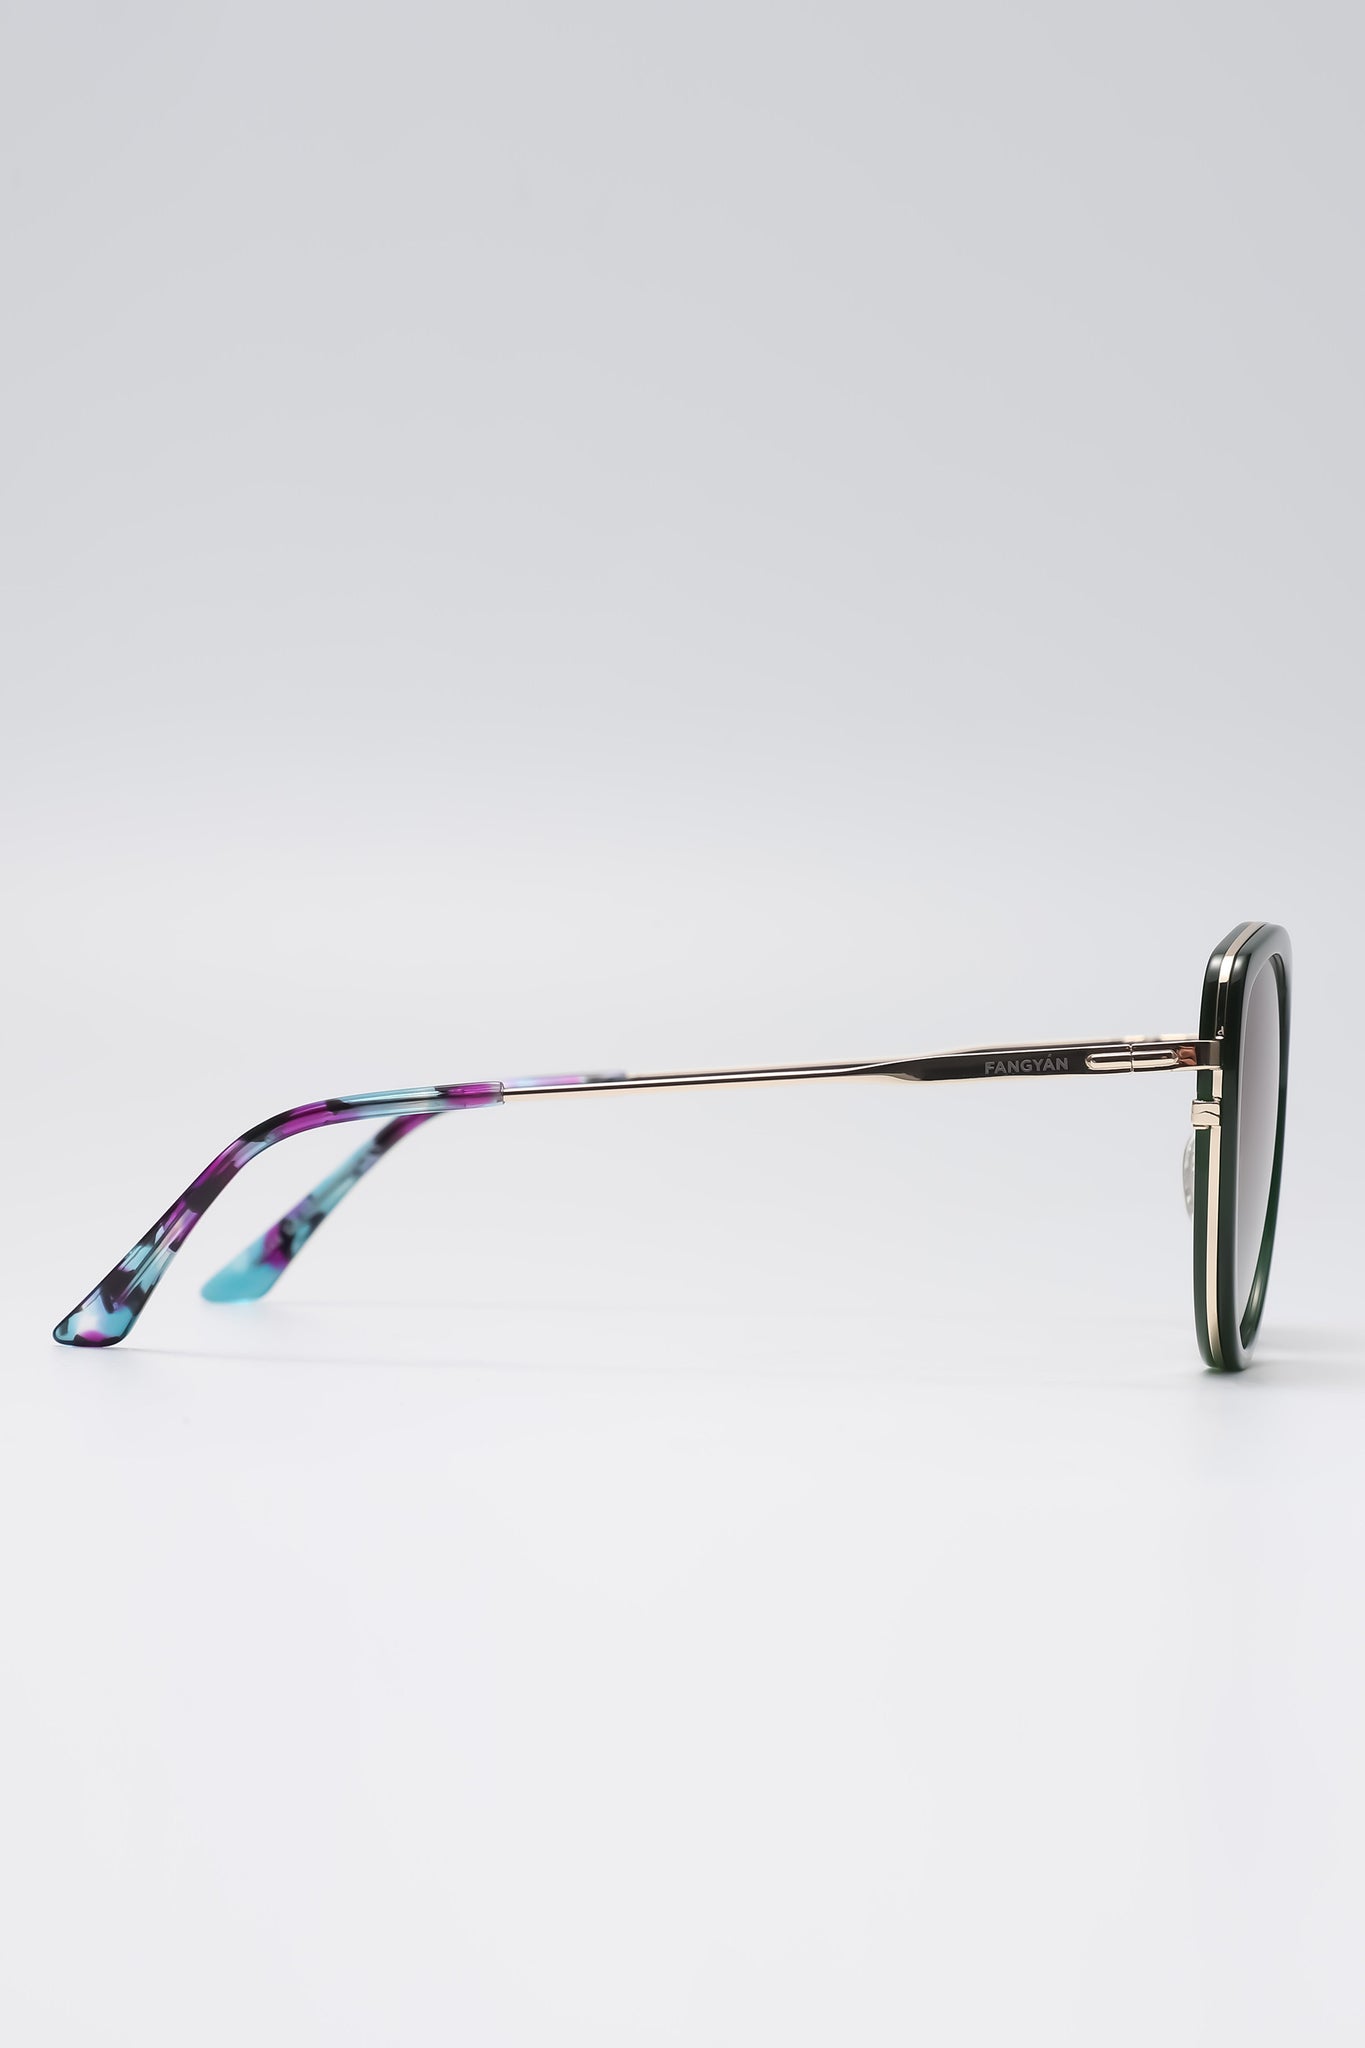 Fangyan | Square-Round Metal Green Sunglasses